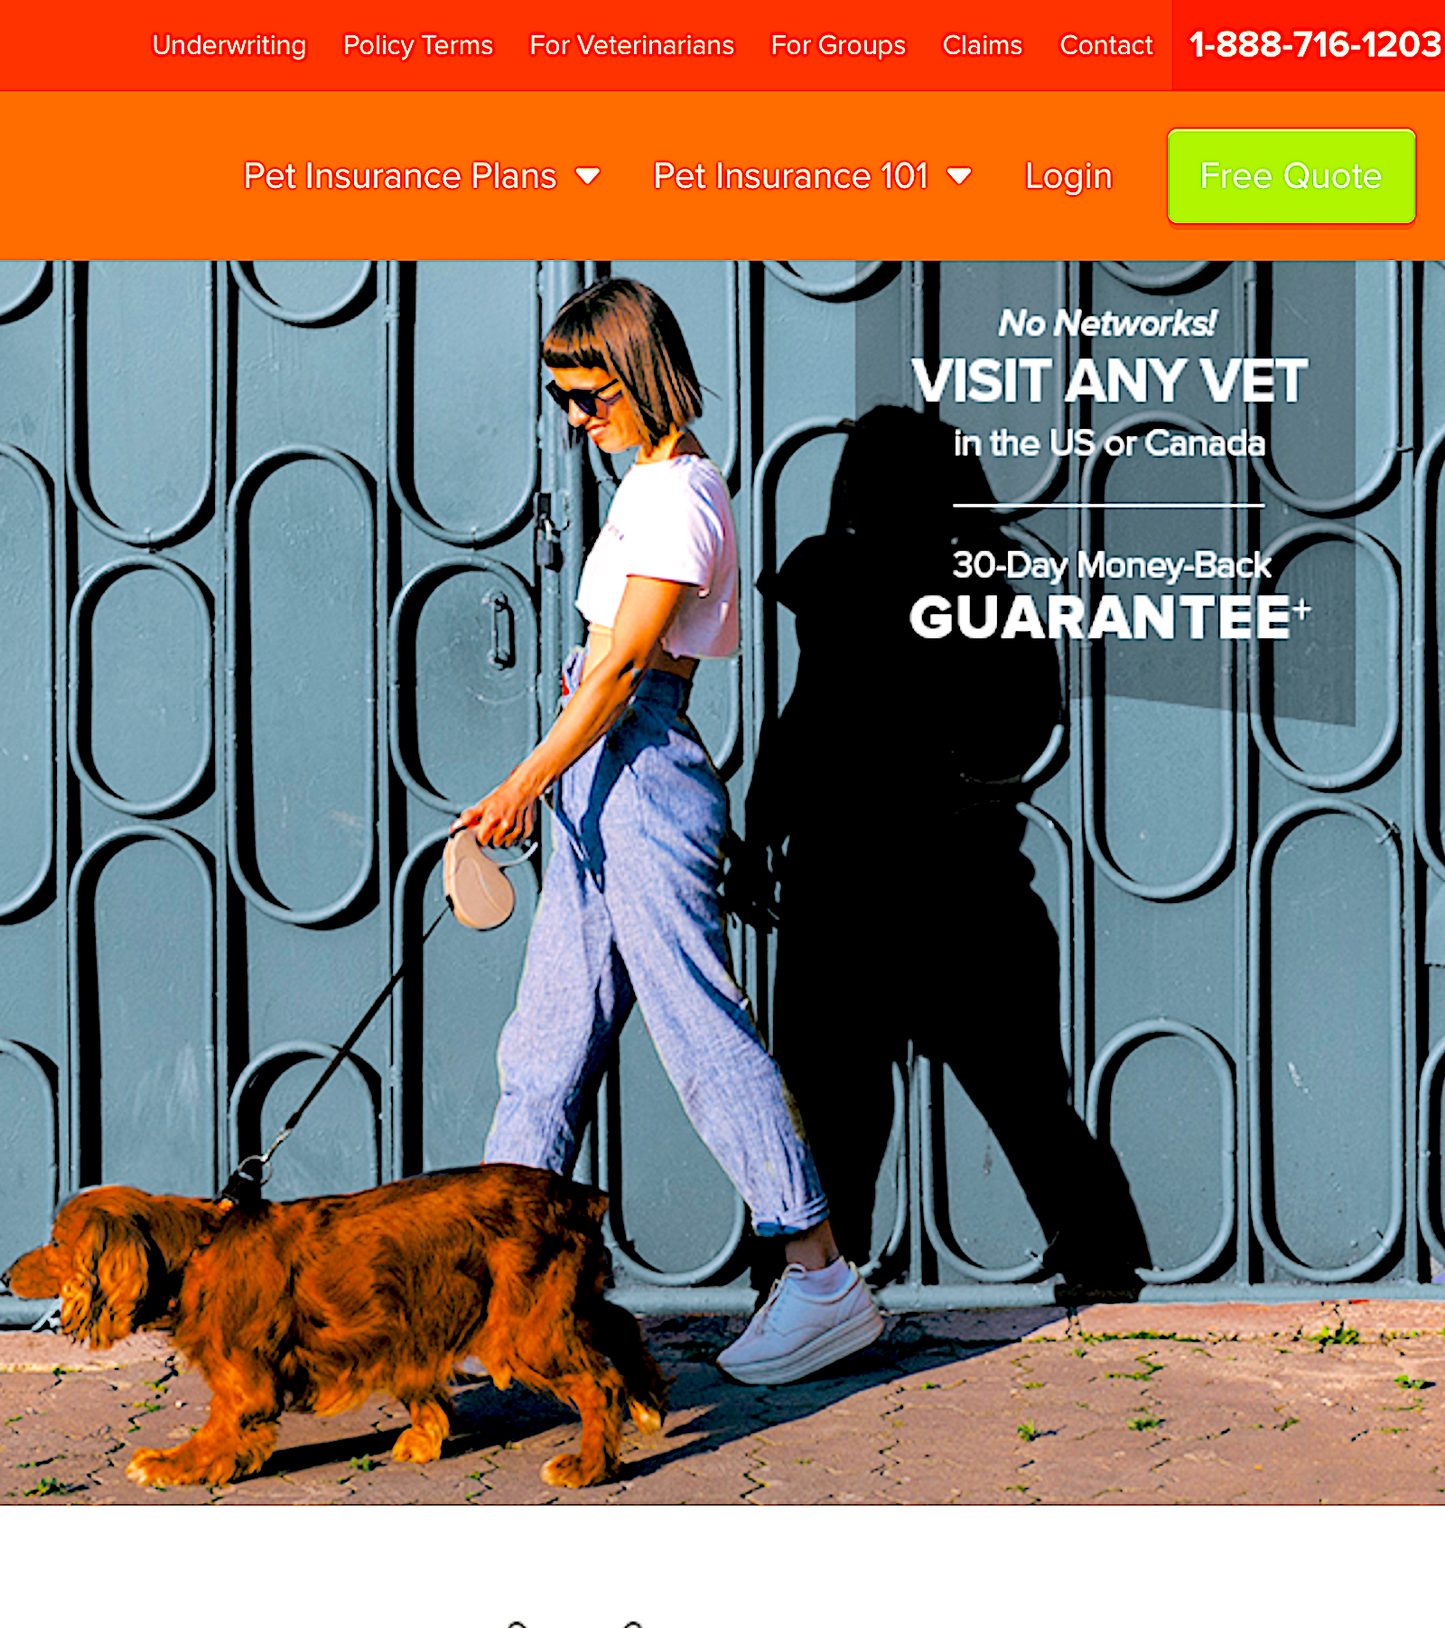 ASPCA PET INSURANCE: no networks, visit any vet in US or Canada - Vital Vet